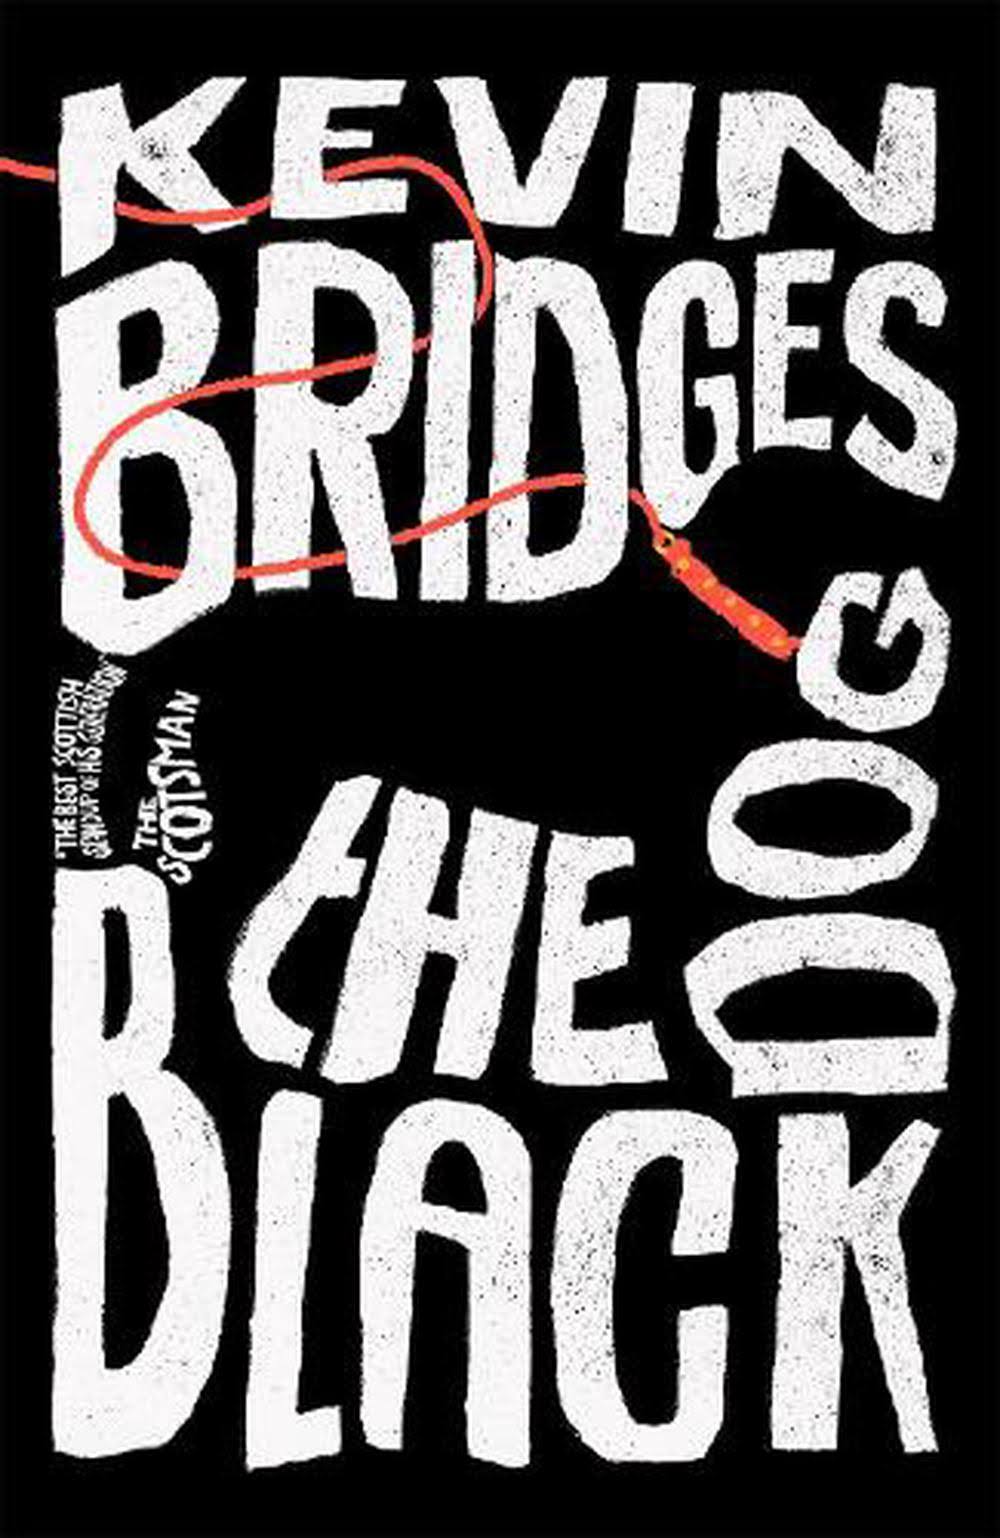 The Black Dog by Kevin Bridges